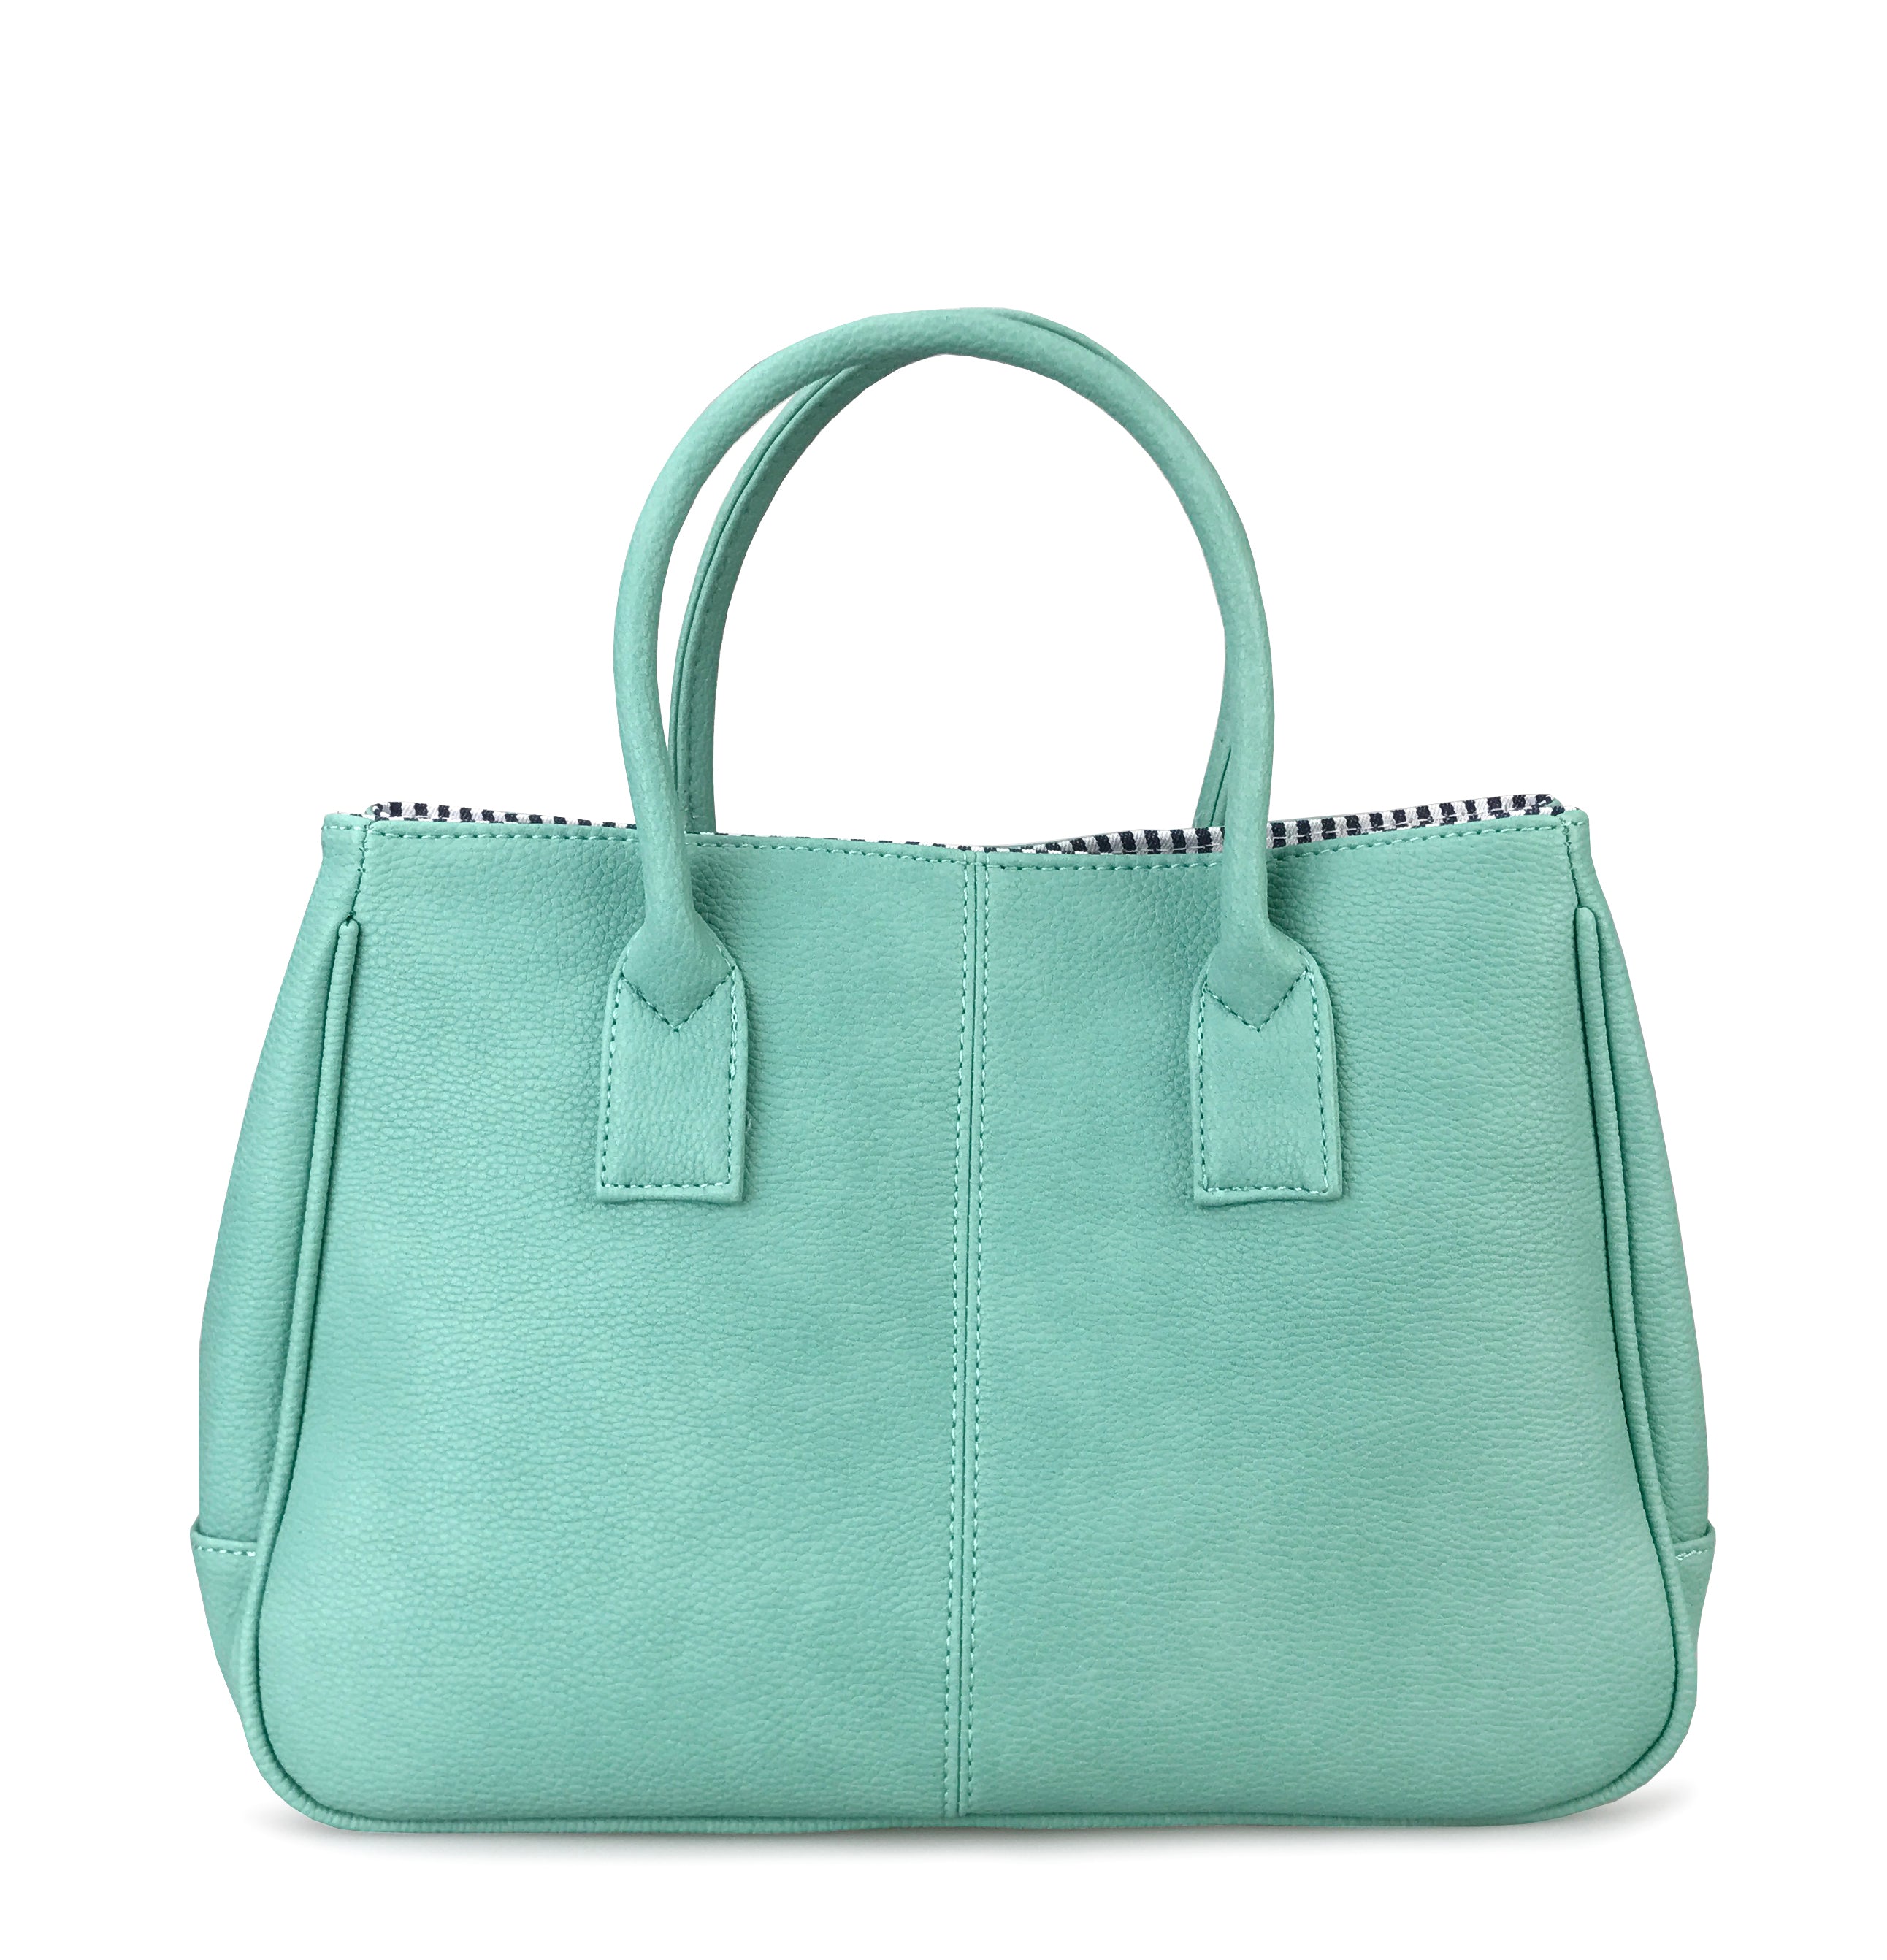 ishAni trends Handbags Shoulder Hobo Bag Purse for women (green)